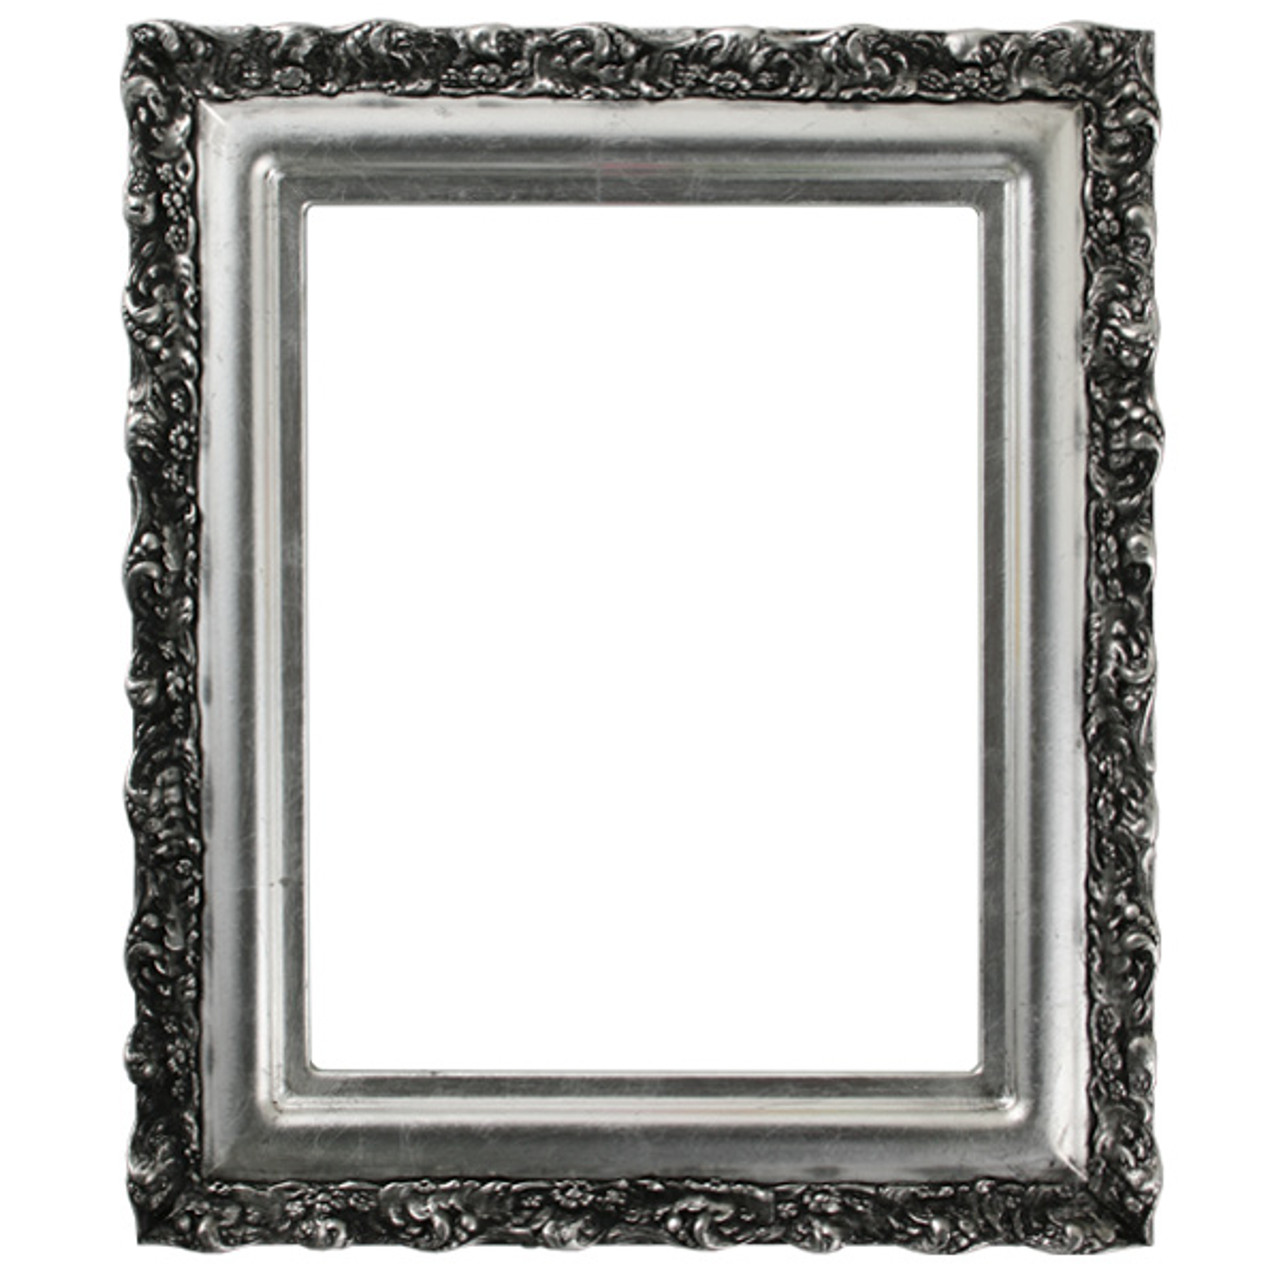 black and white vintage frame